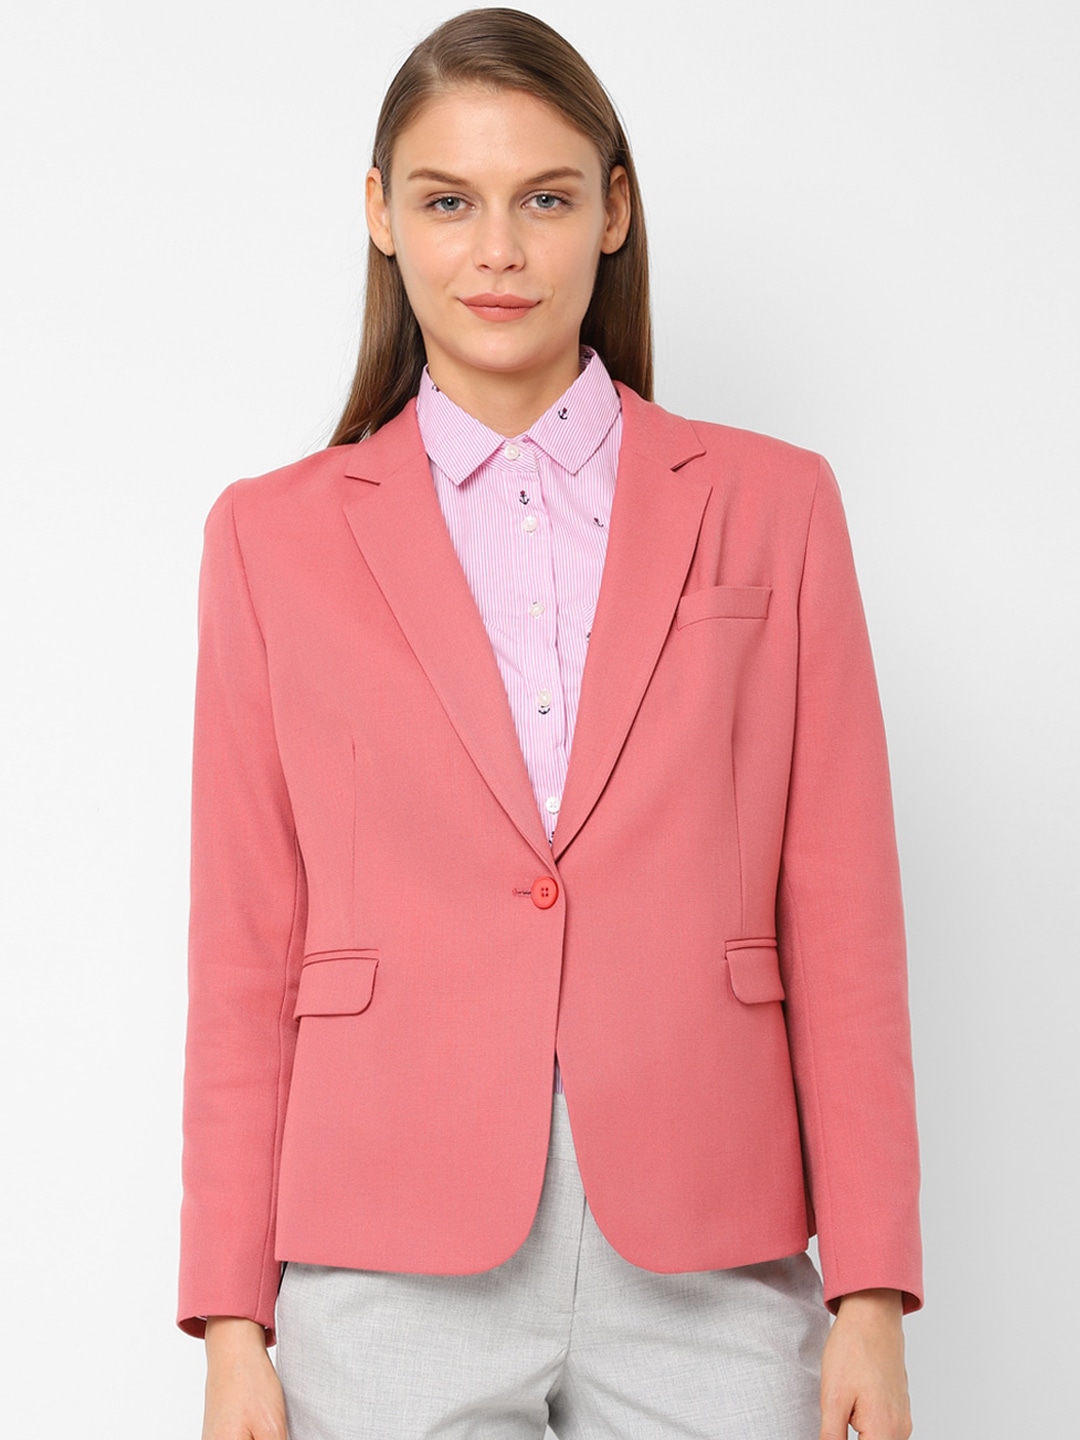 Clothing Blazers | Allen Solly Woman Women Pink Solid Blazer - GZ02990